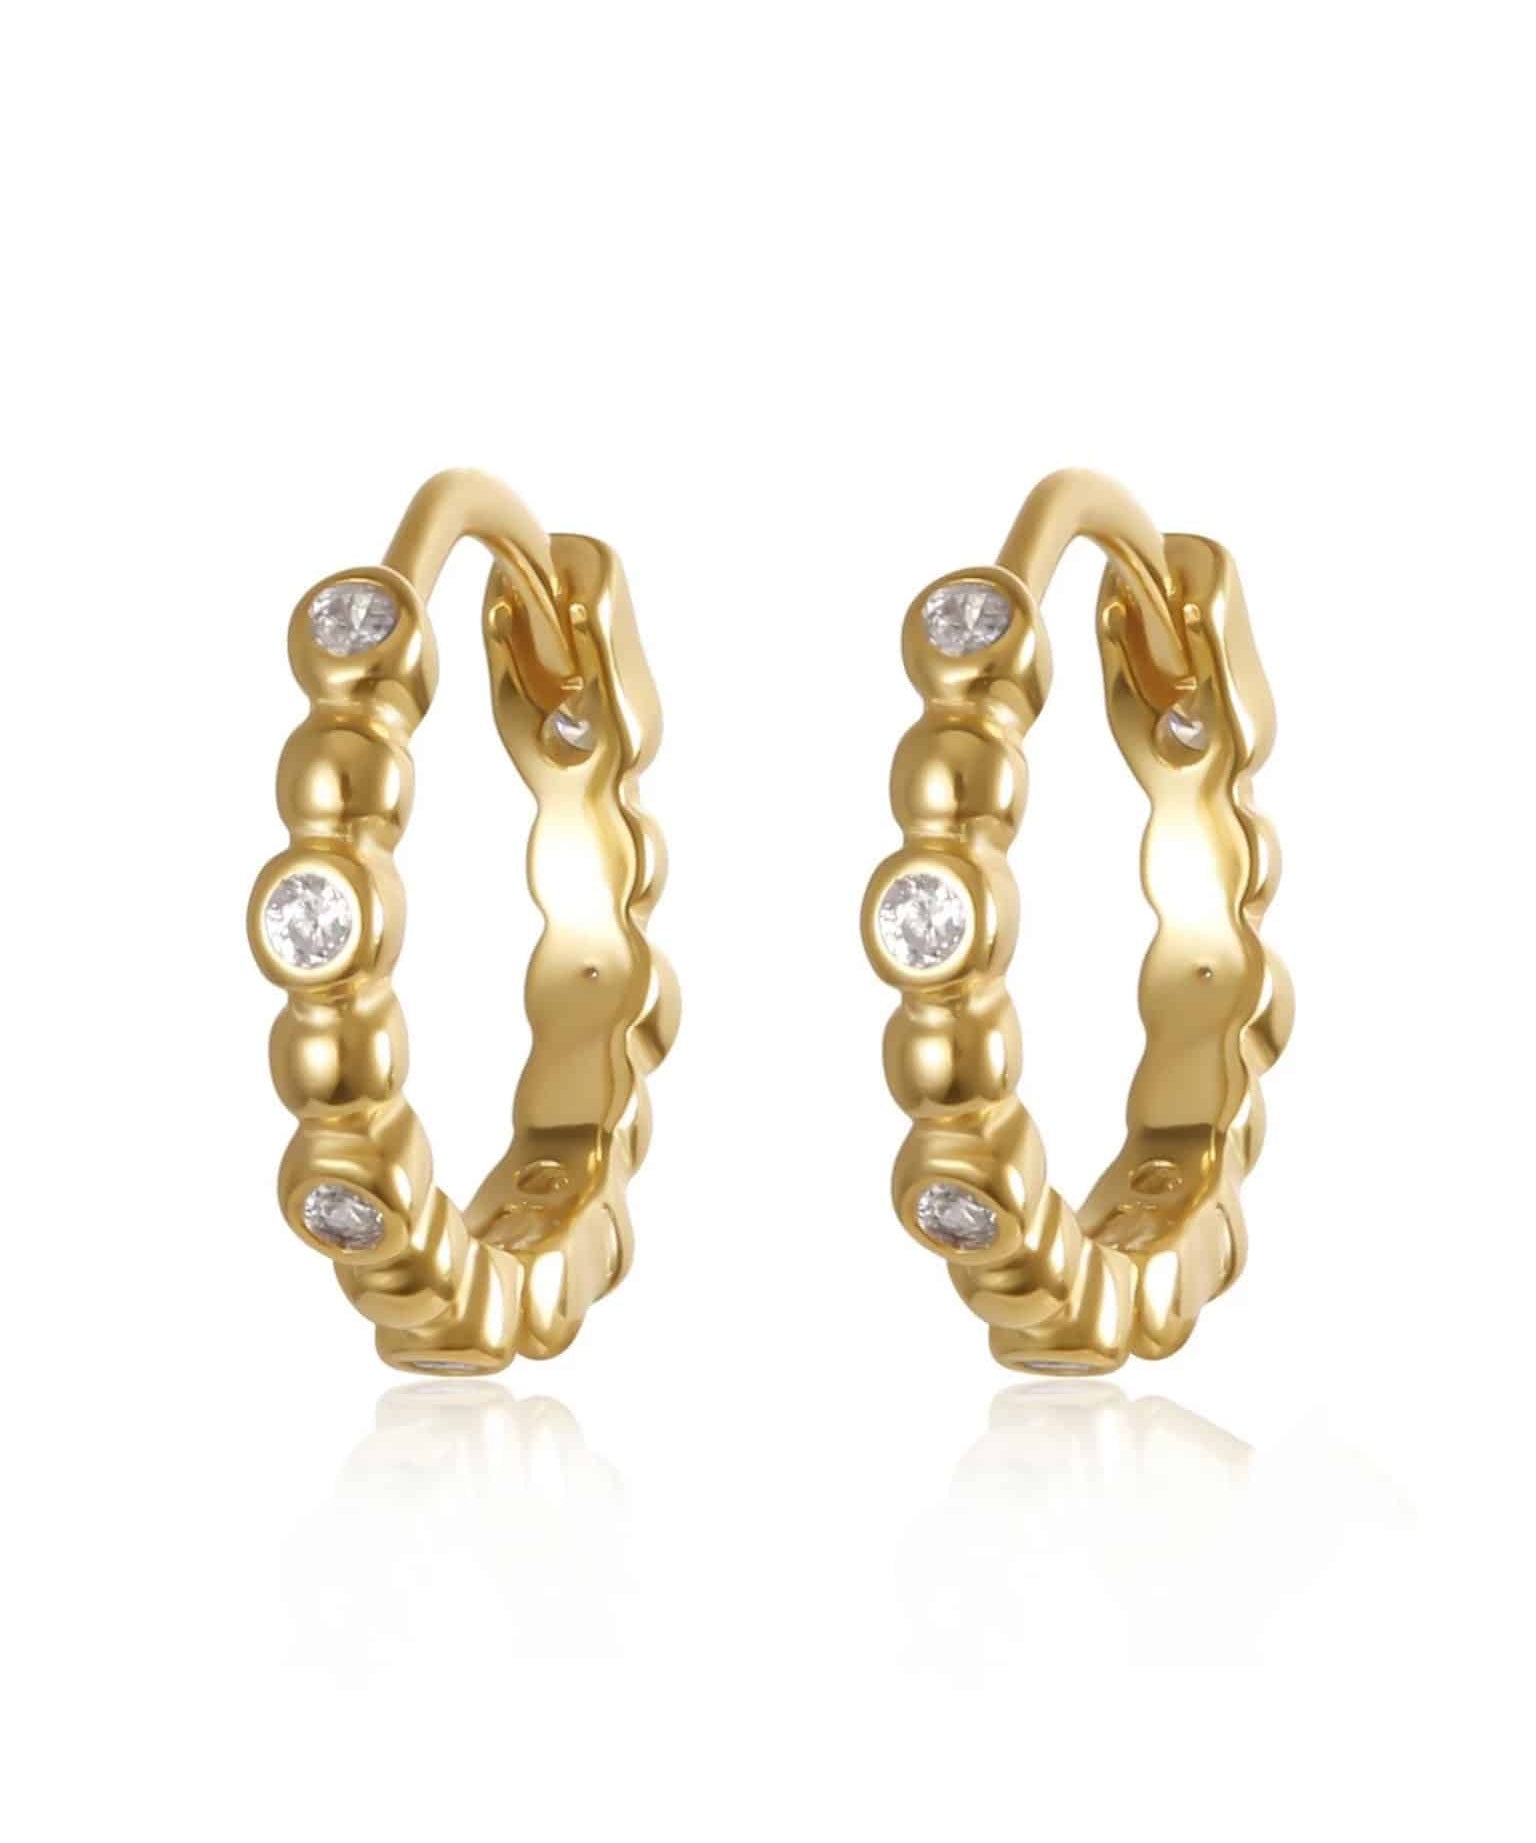 Basic Hoop Earrings "Marrakech" Gold